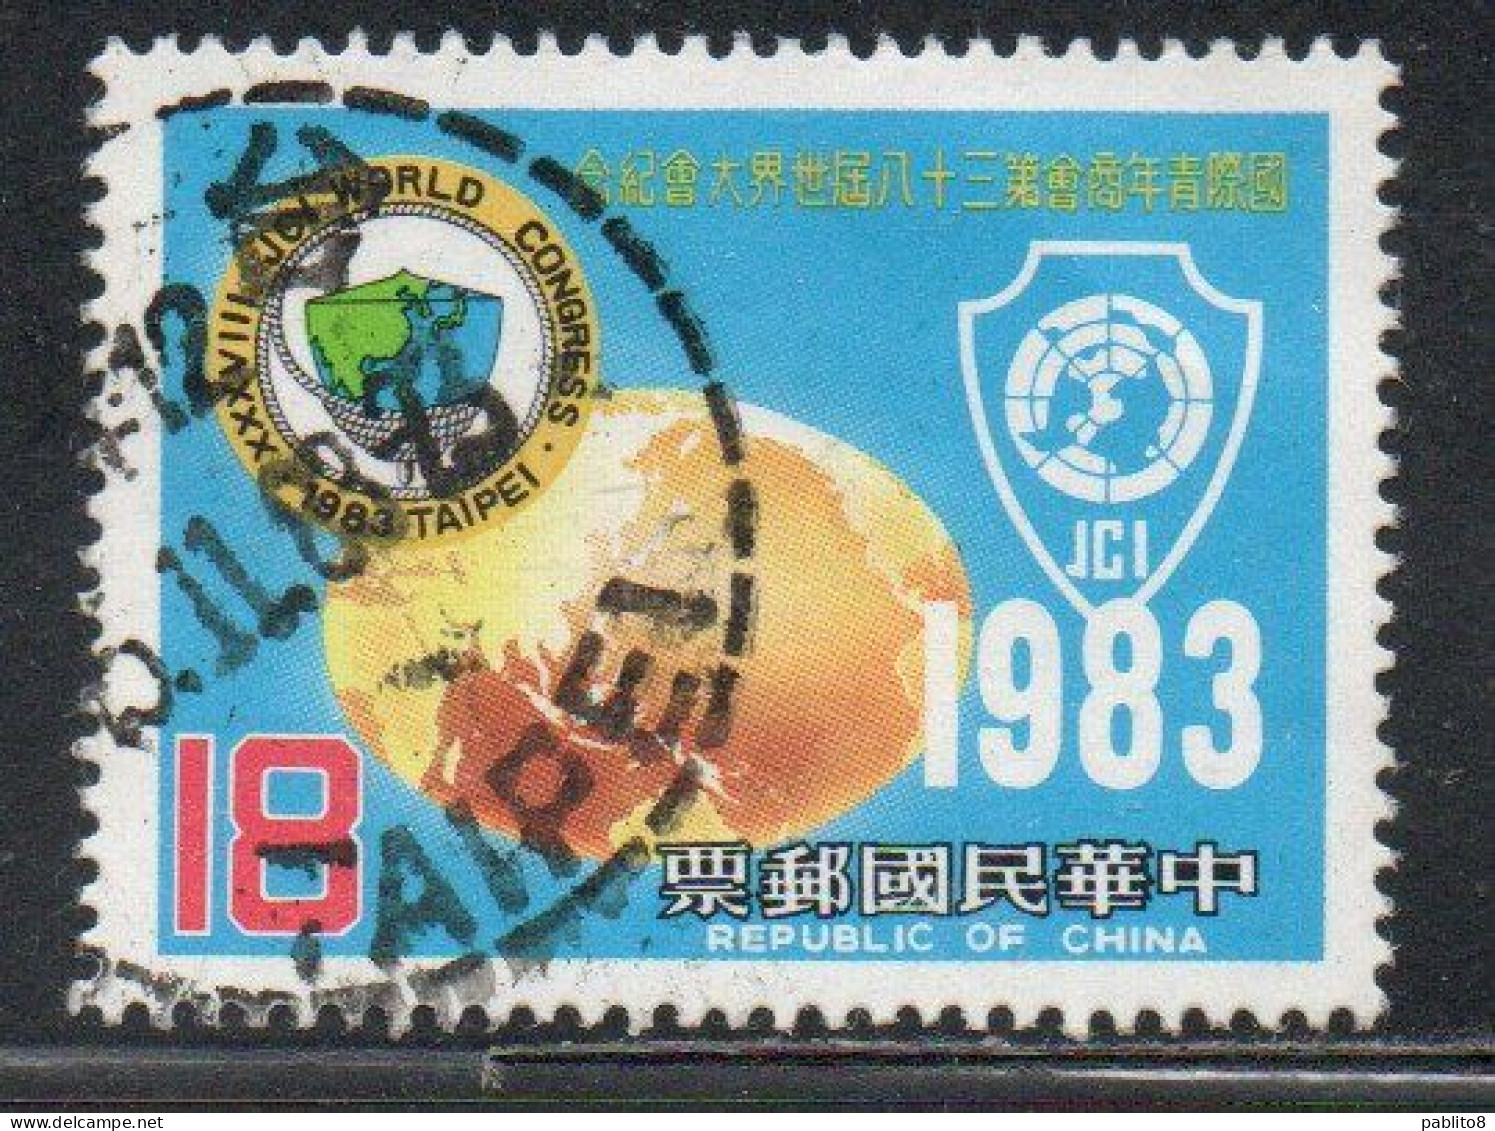 CHINA REPUBLIC CINA TAIWAN FORMOSA 1983 JCI JAYCEES INTERNATIONAL WORLD CONGRESS GLOBE EMBLEMS 18$ USED USATO OBLITERE' - Usados